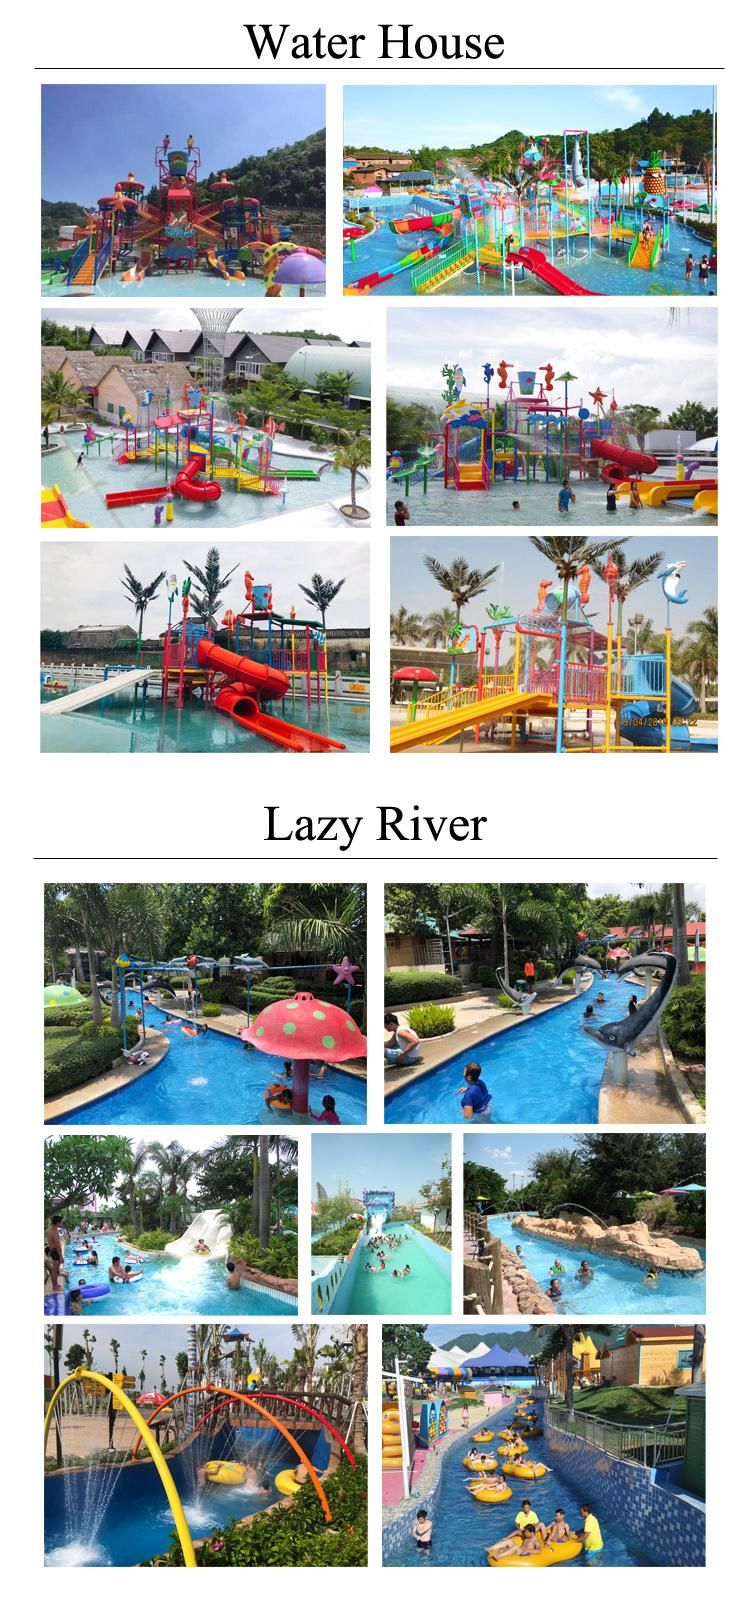 Family Mini Boomerango Water Park Slide Supplier